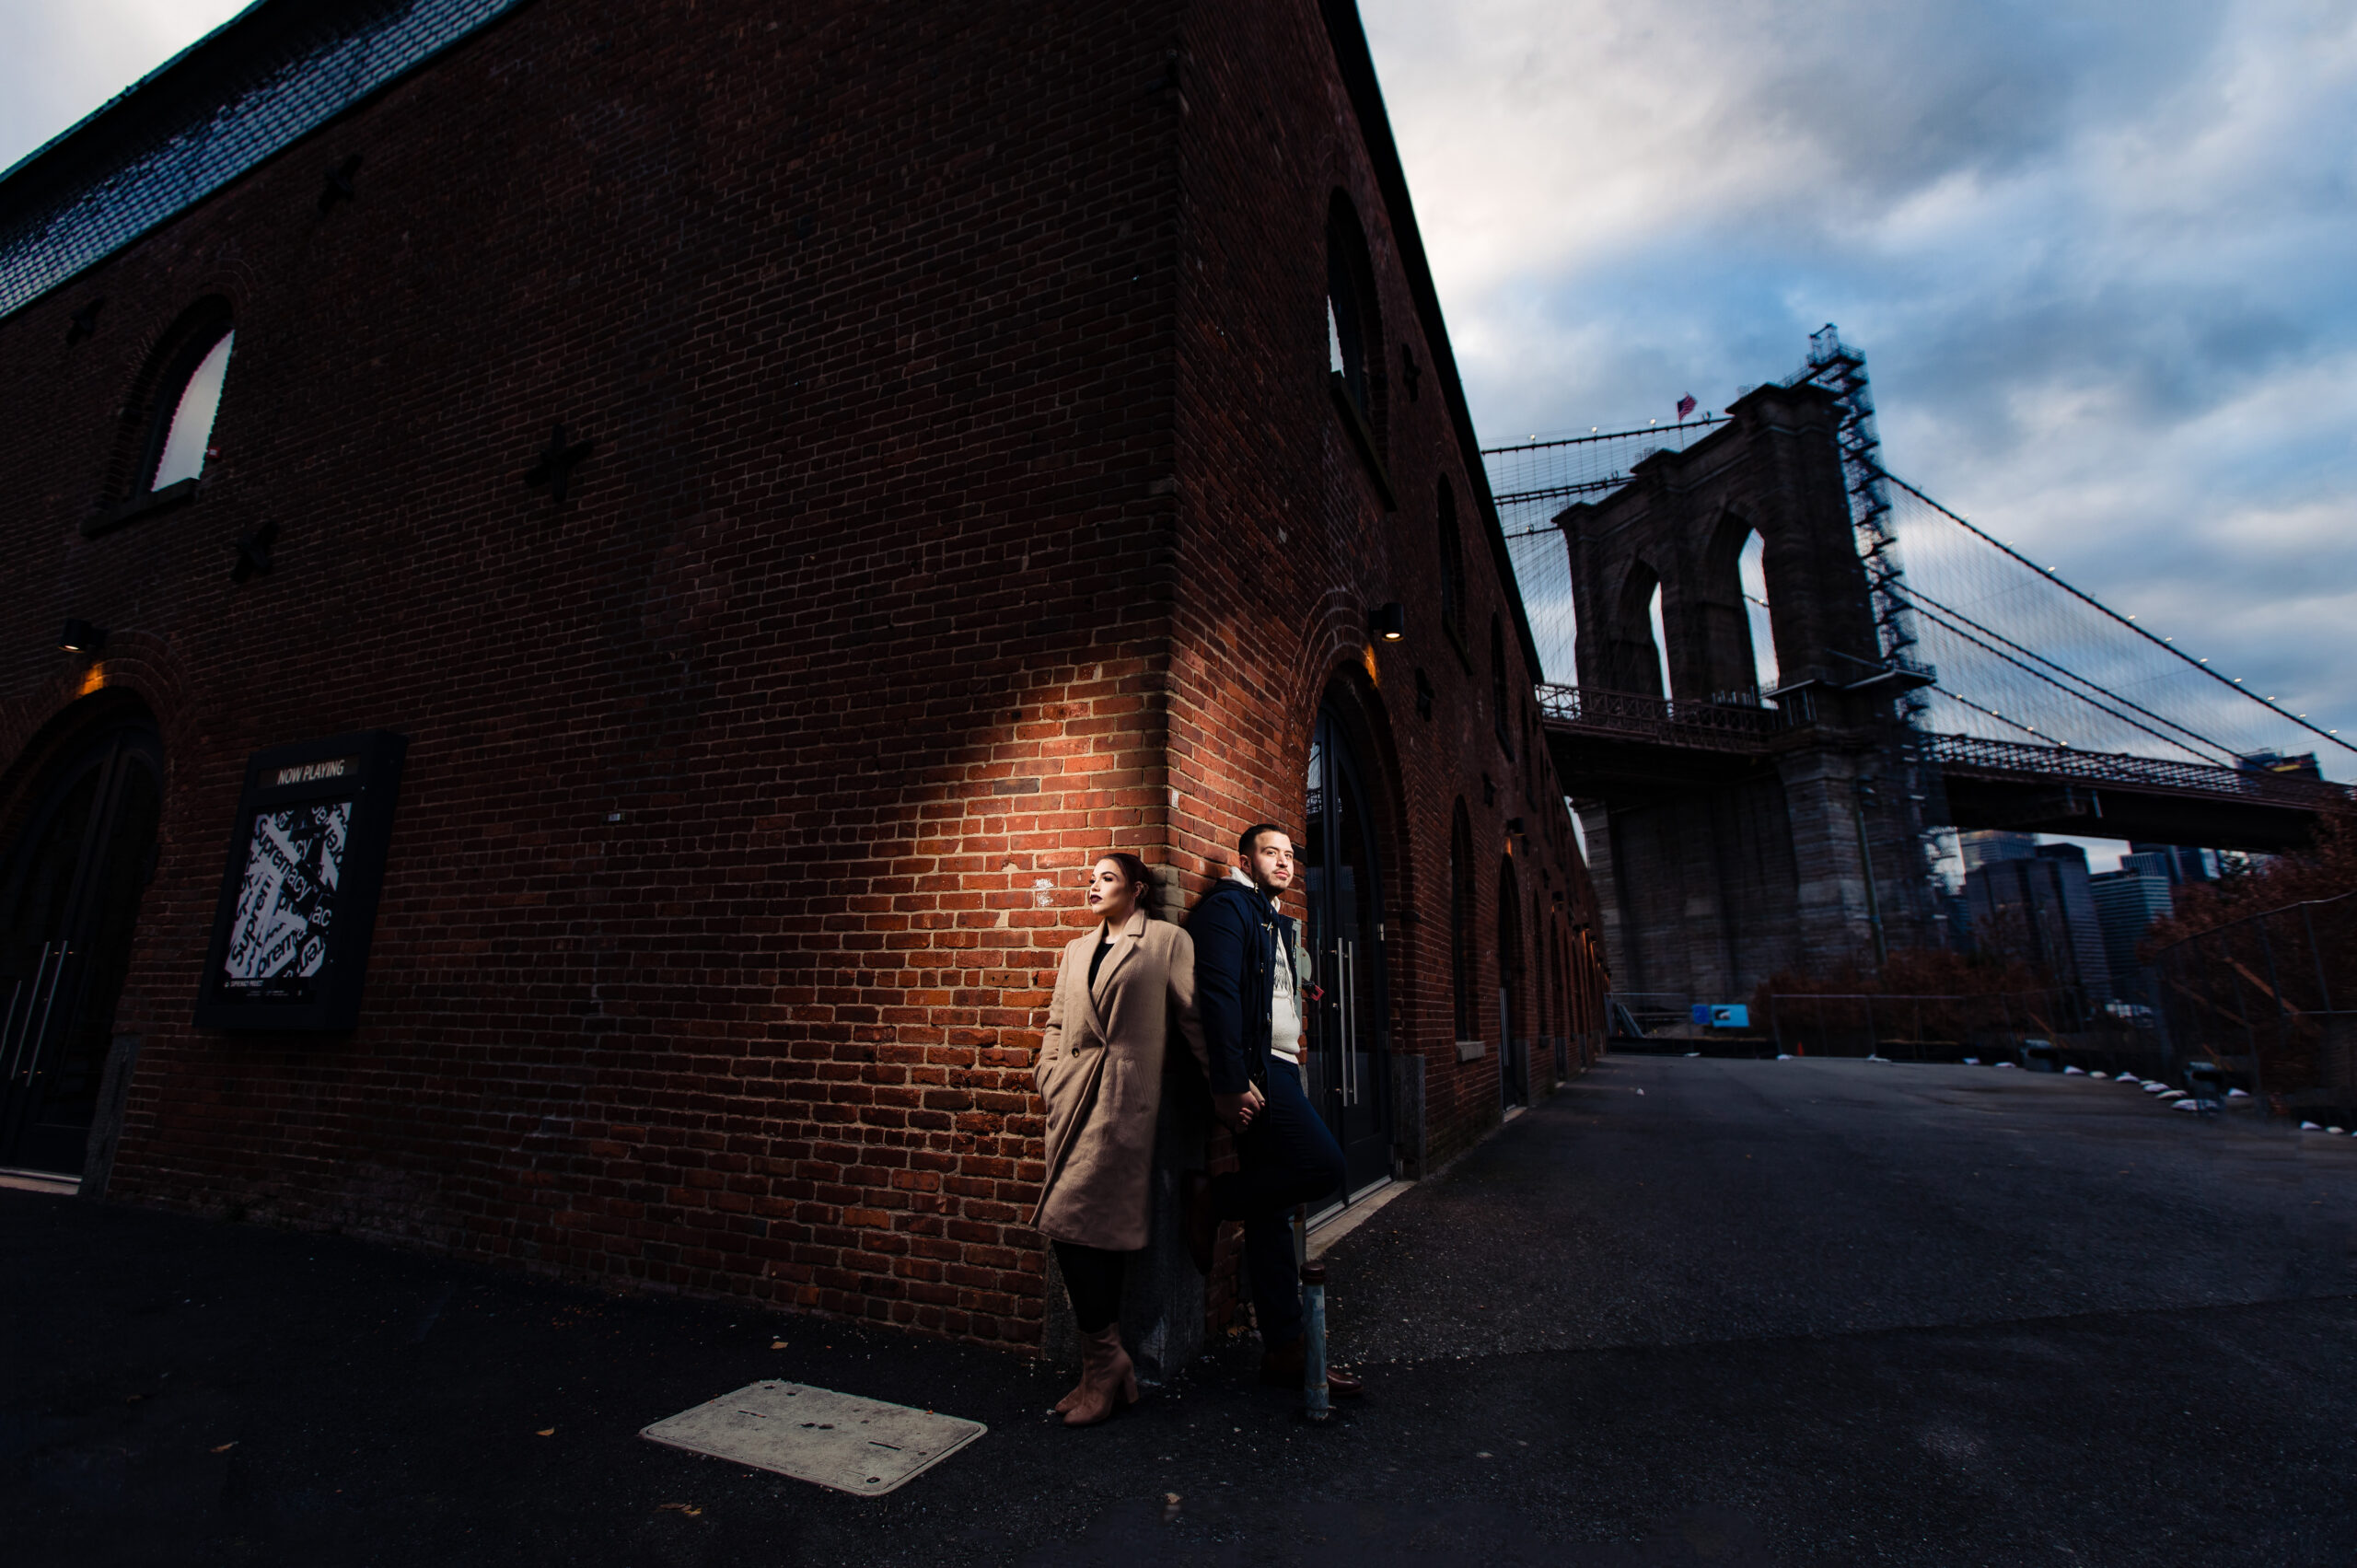 Stunning Brooklyn Bridge engagement photography captured by New Jersey Wedding Photographer Jarot Bocanegra.